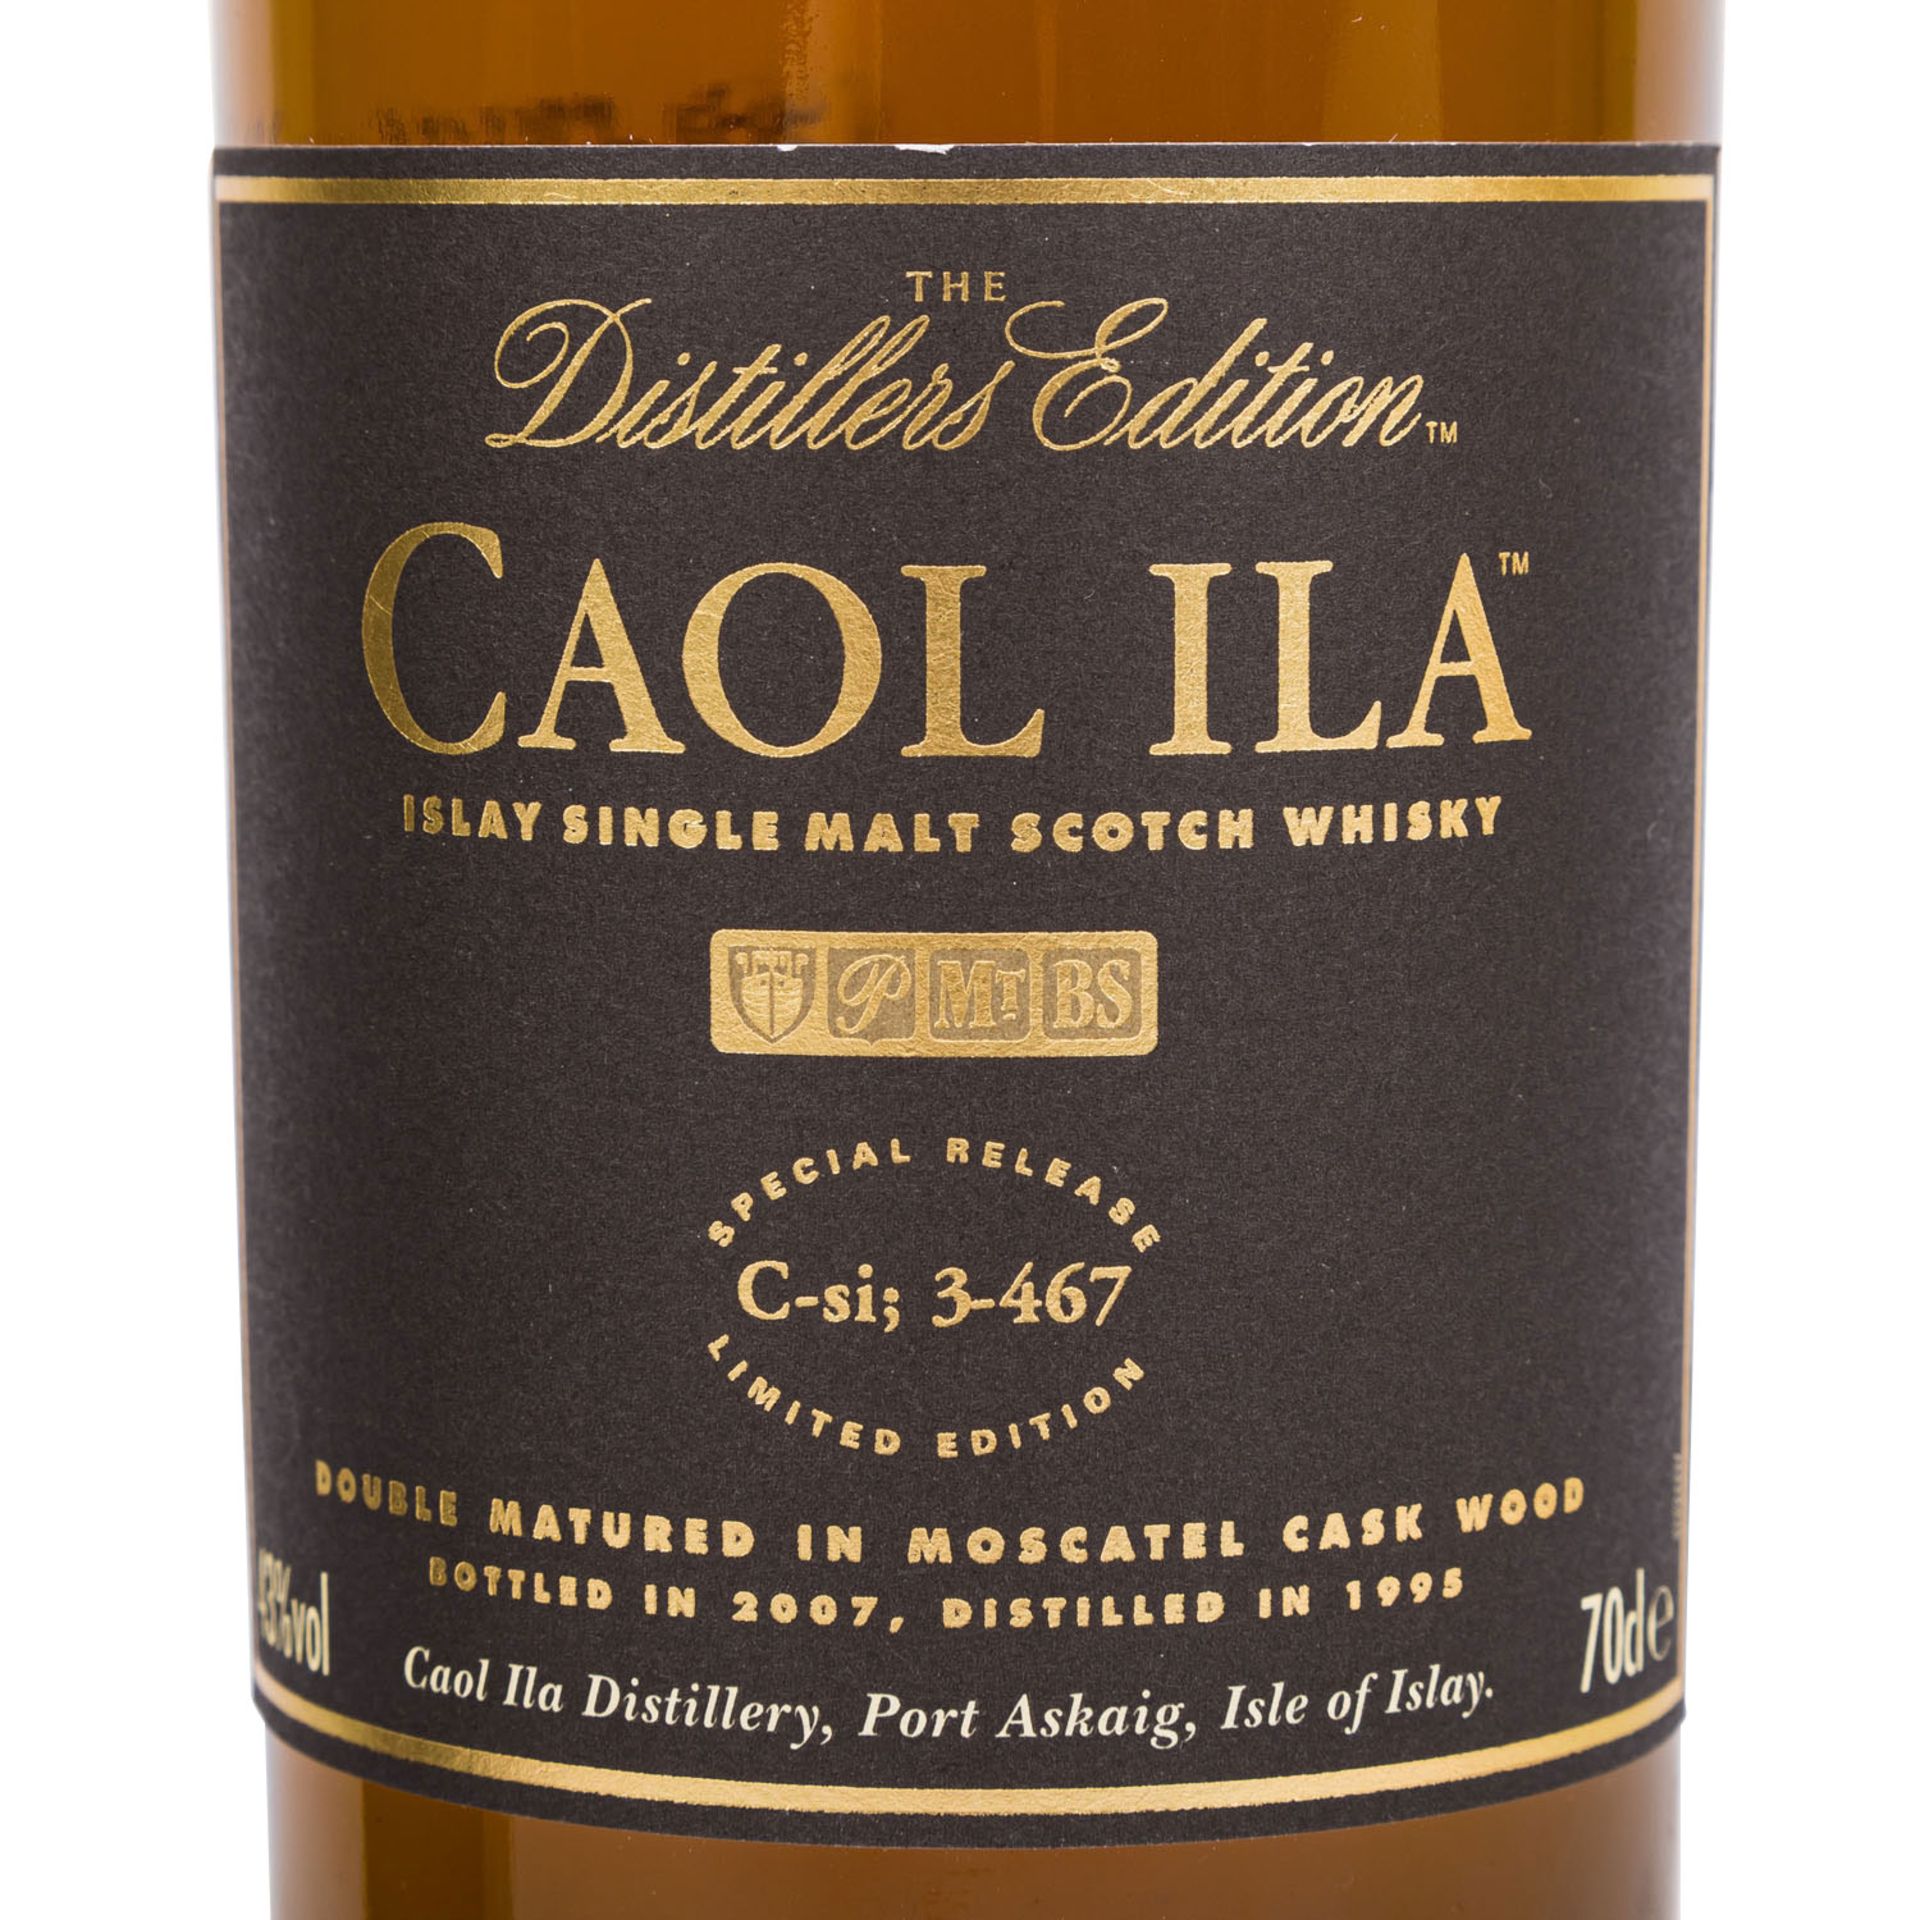 CAOL ILA DISTILLERS EDITION Moscatel Cask Wood Islay Single Malt Scotch Whisky 1995 - Bild 2 aus 4